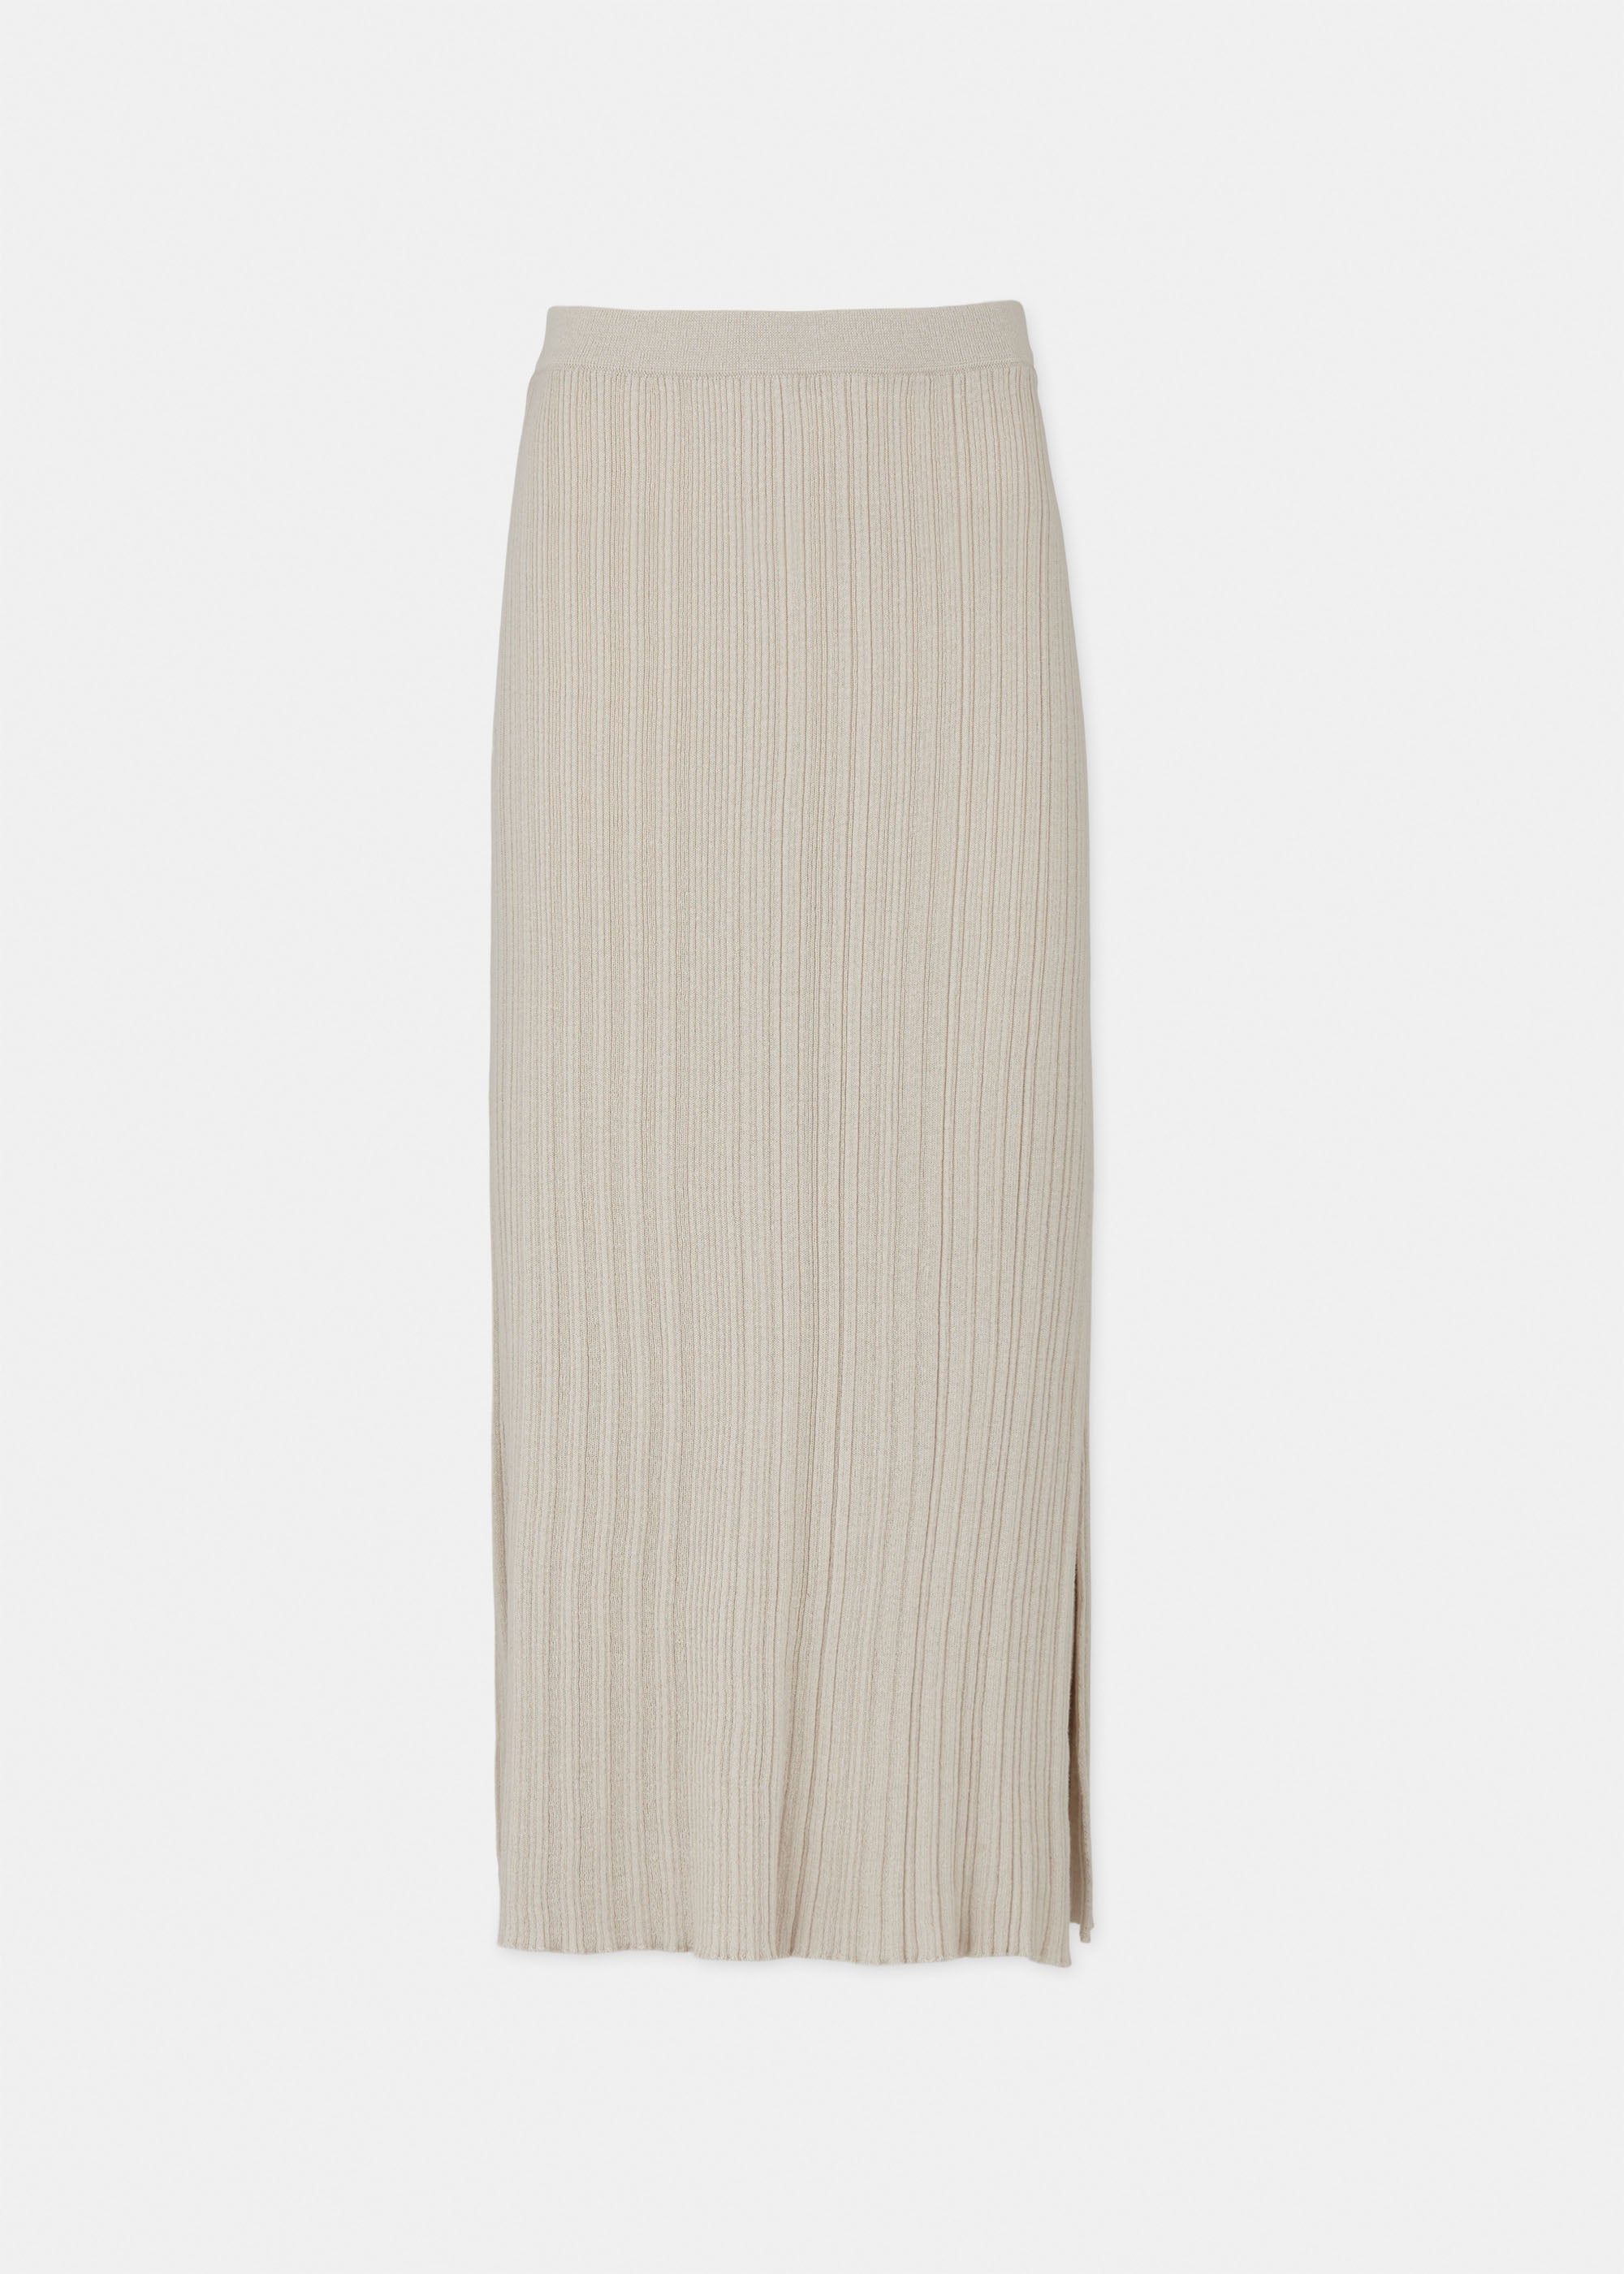 Sienne linen blend skirt | Natural